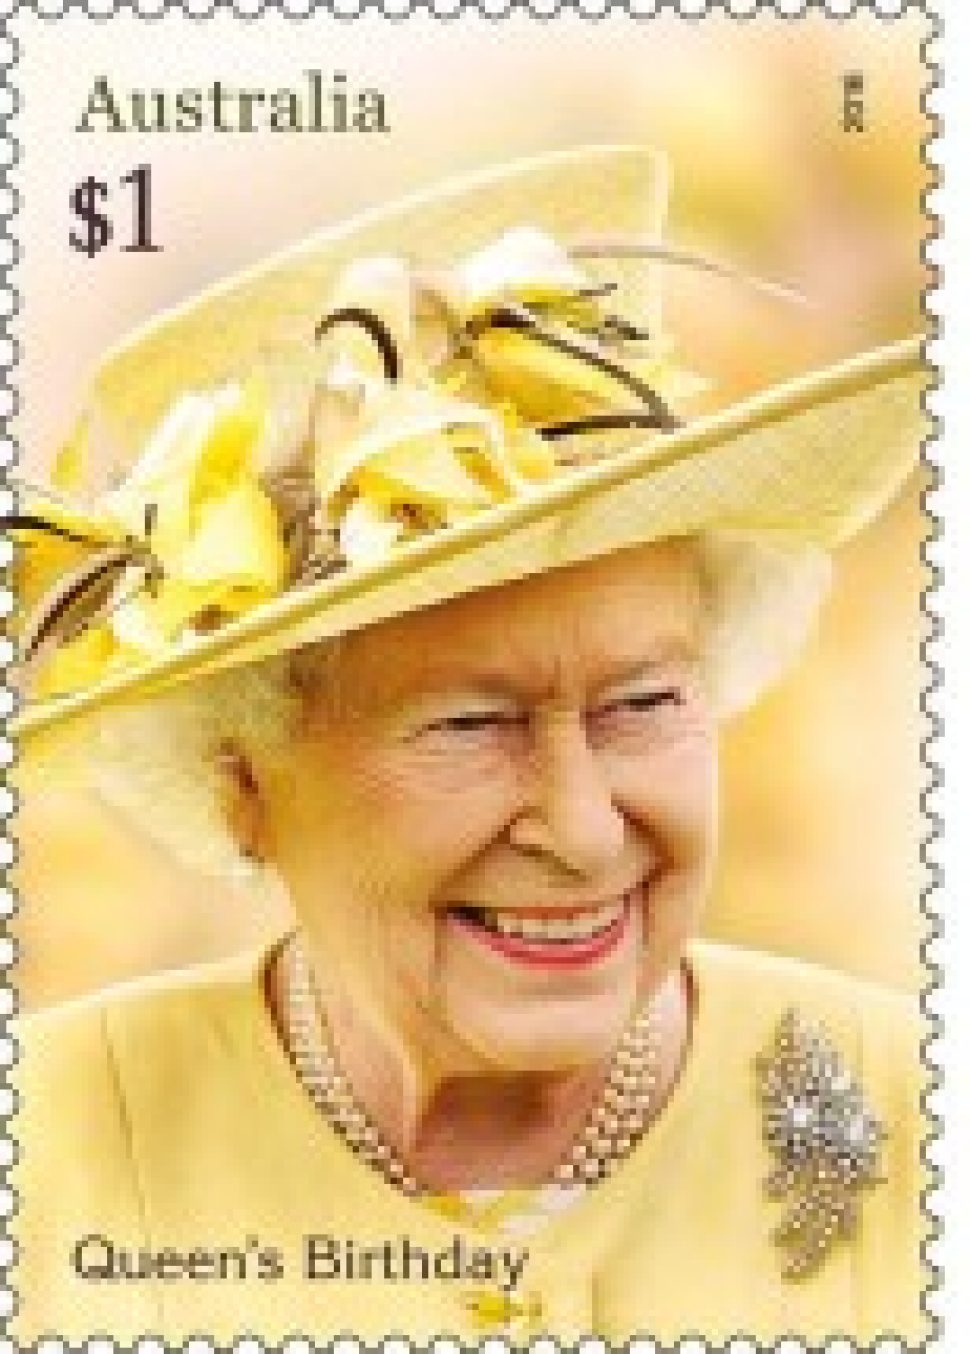 $1 Queen's Birthday stamp